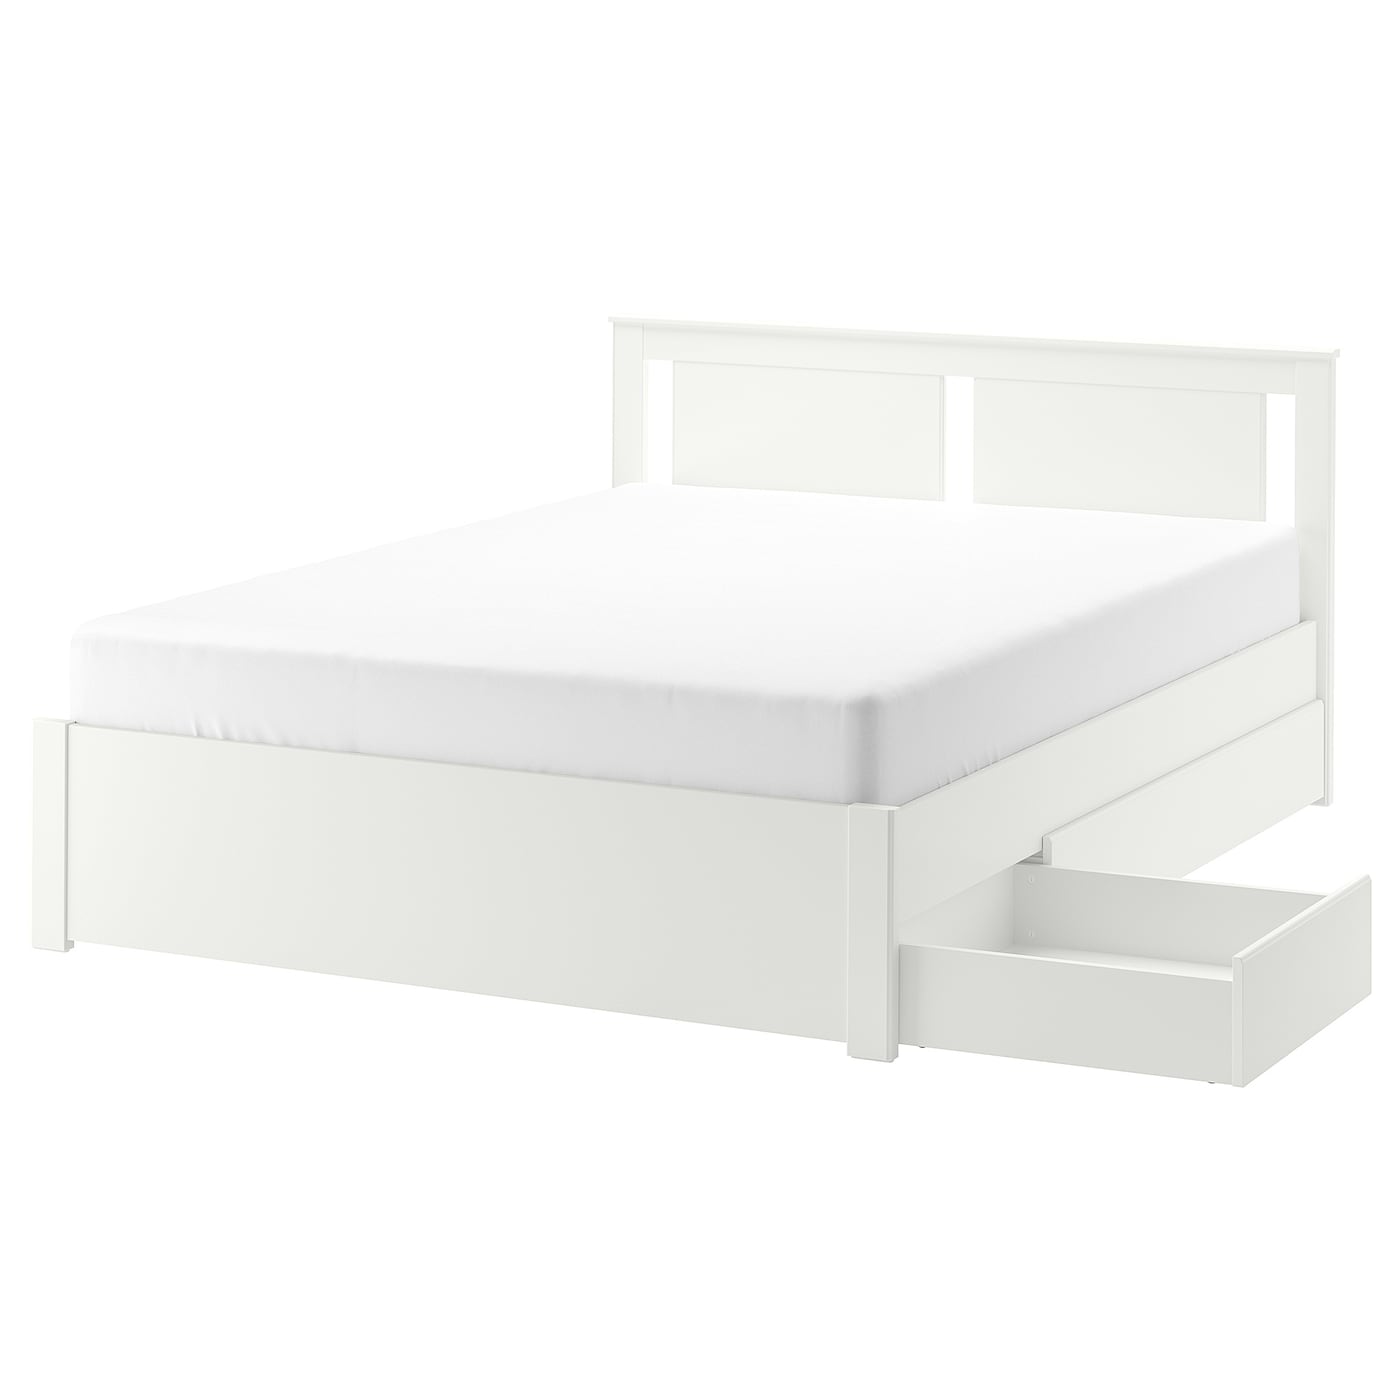 Каркас кровати с 4 ящиками для хранения - IKEA SONGESAND, 200х140 см, белый, СОНГЕСАНД ИКЕА